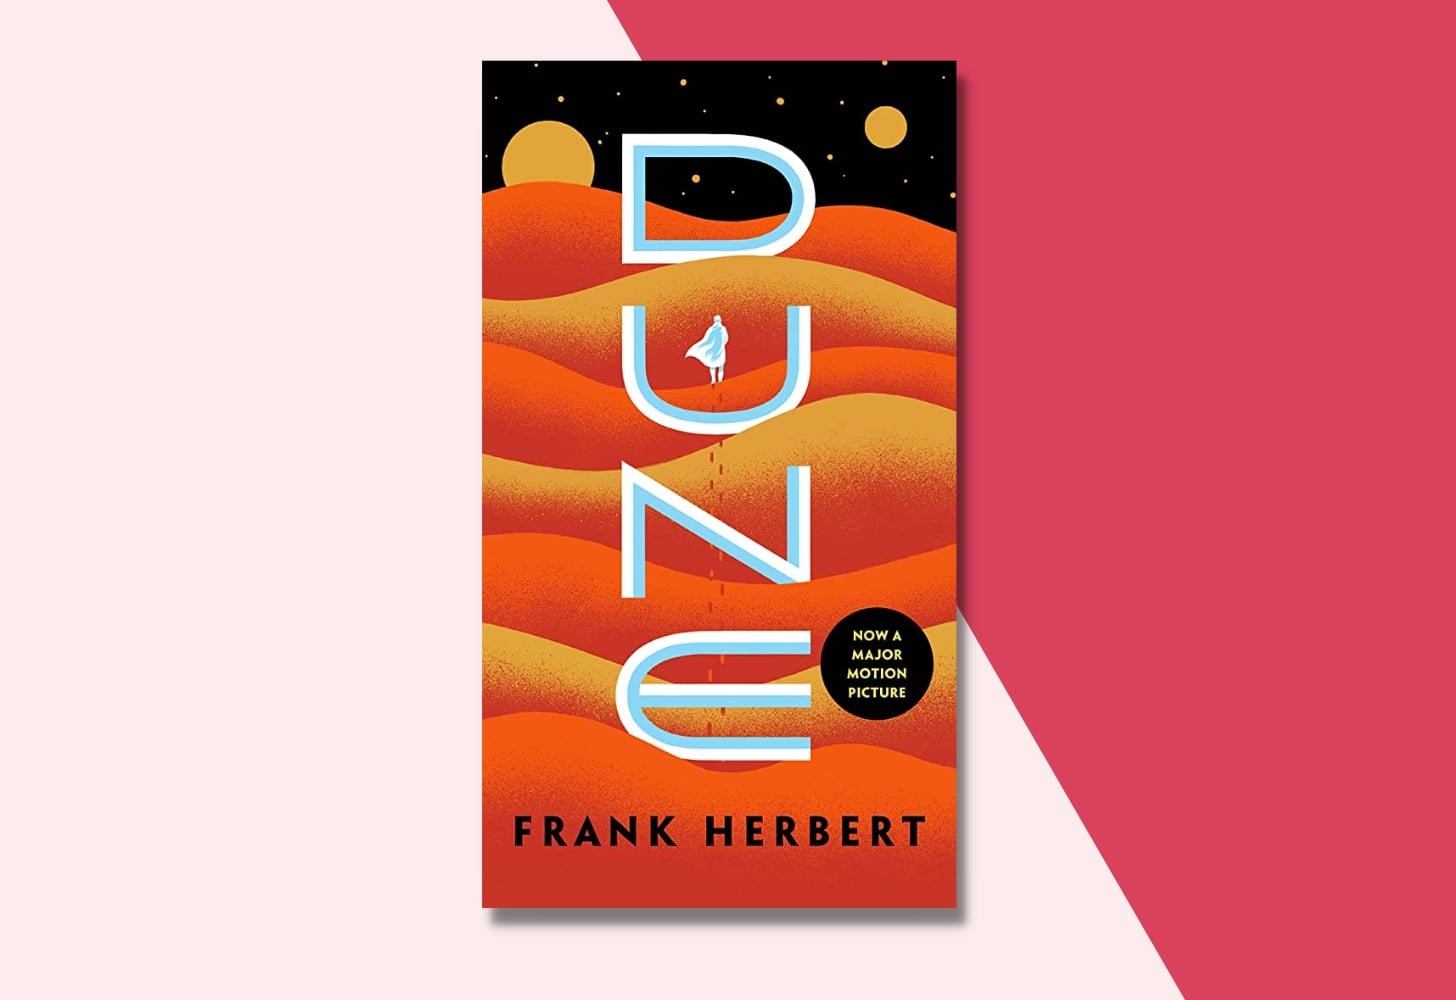 “Dune” by Frank Herbert